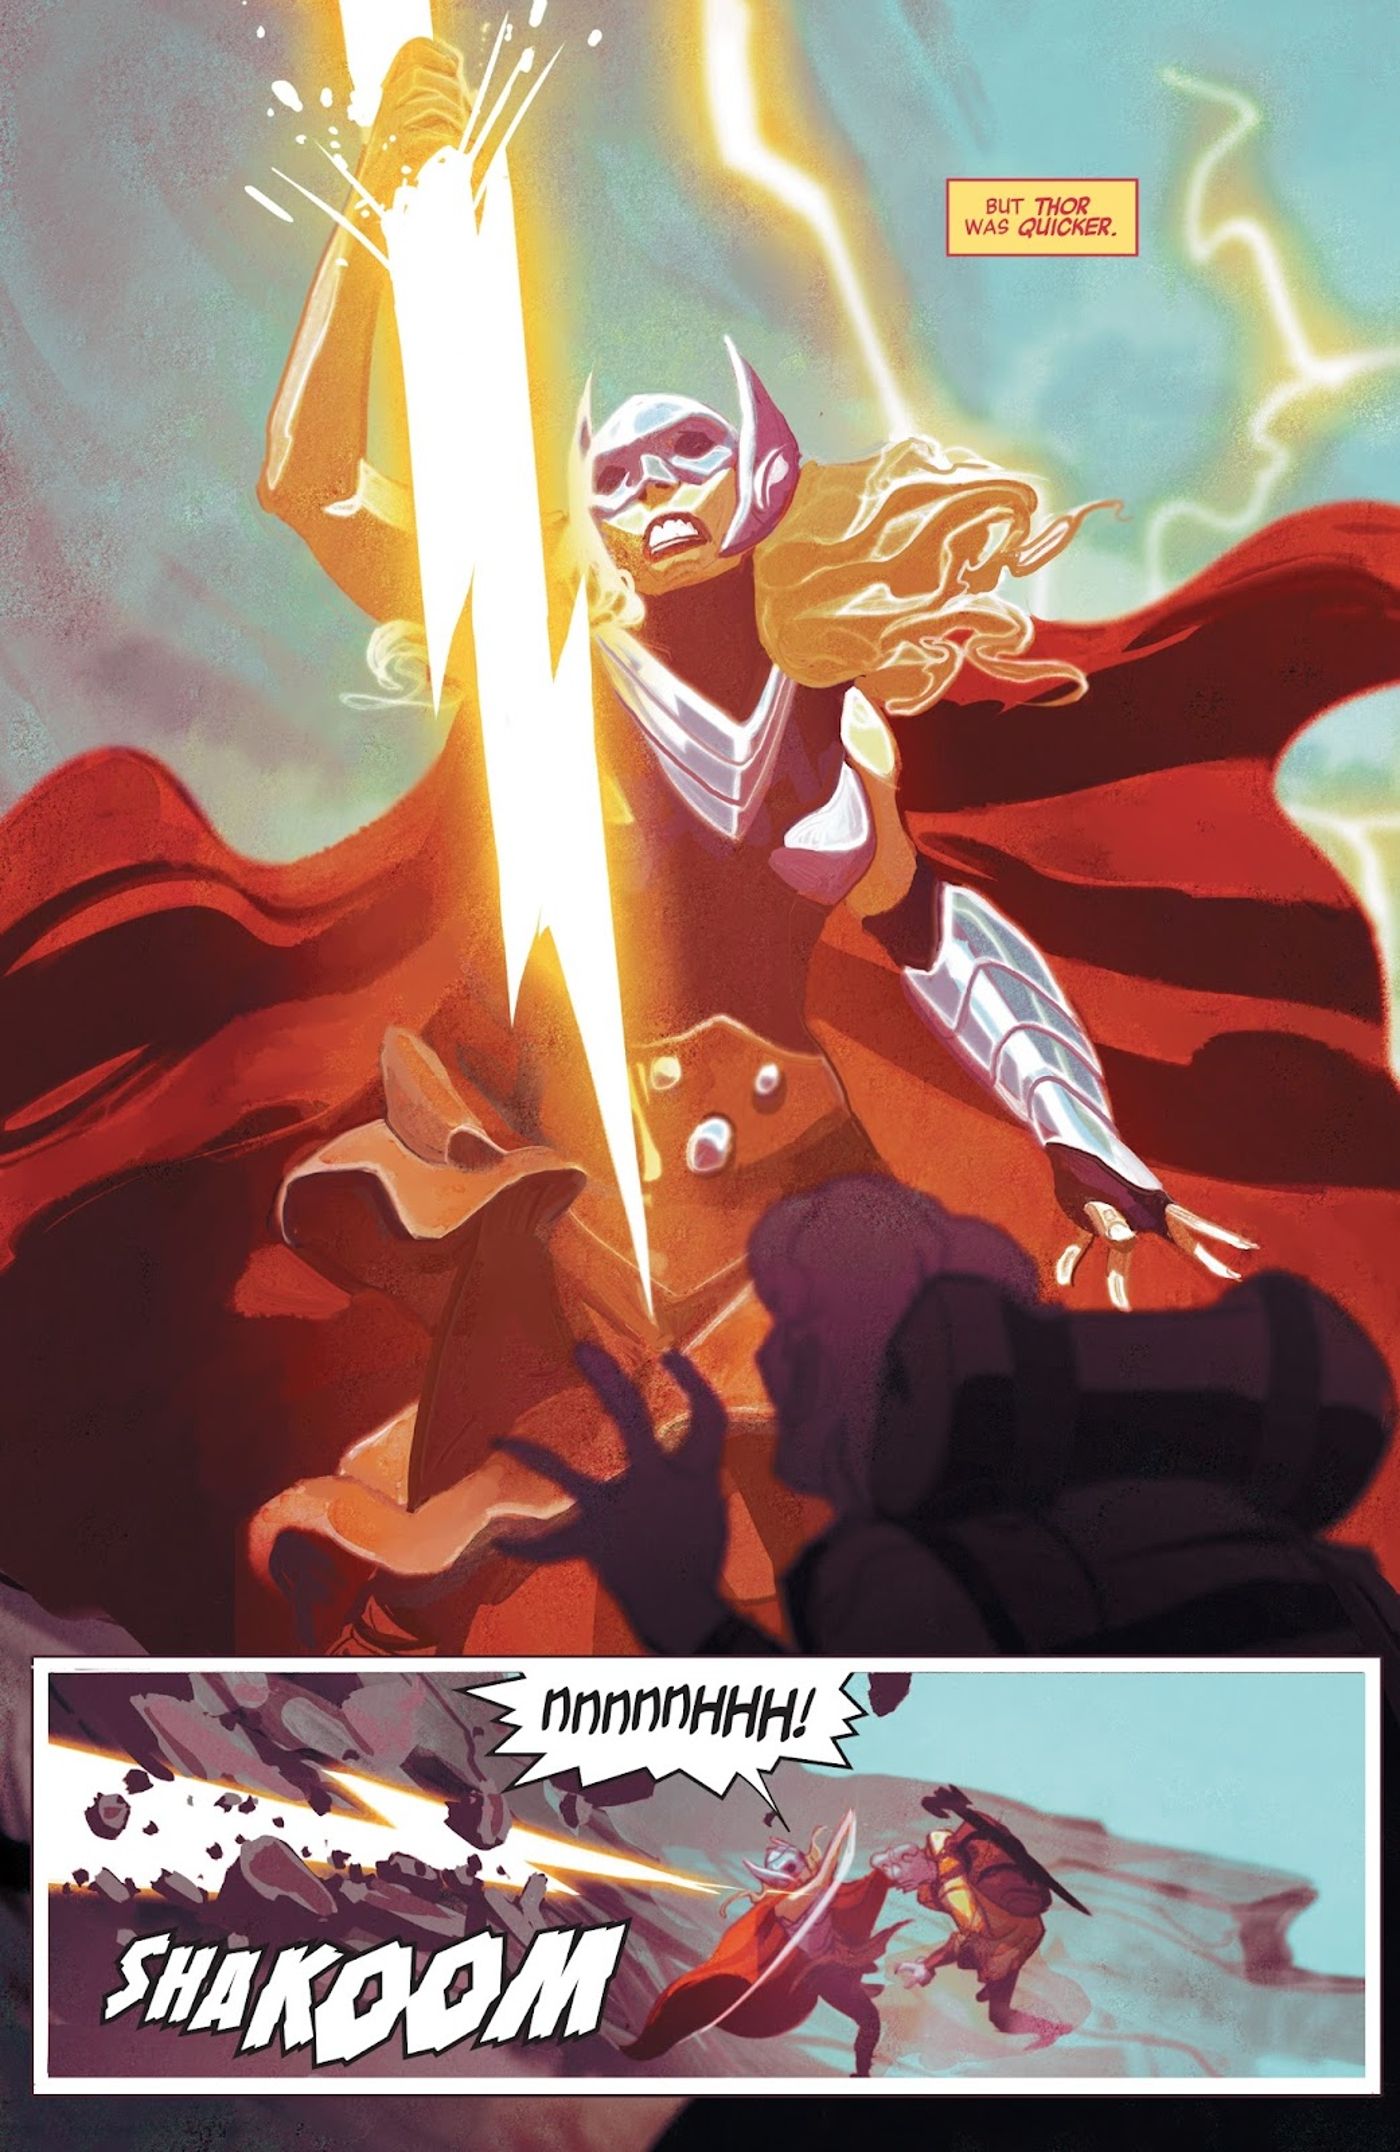 Jane-Foster-Thor-catches-lightning